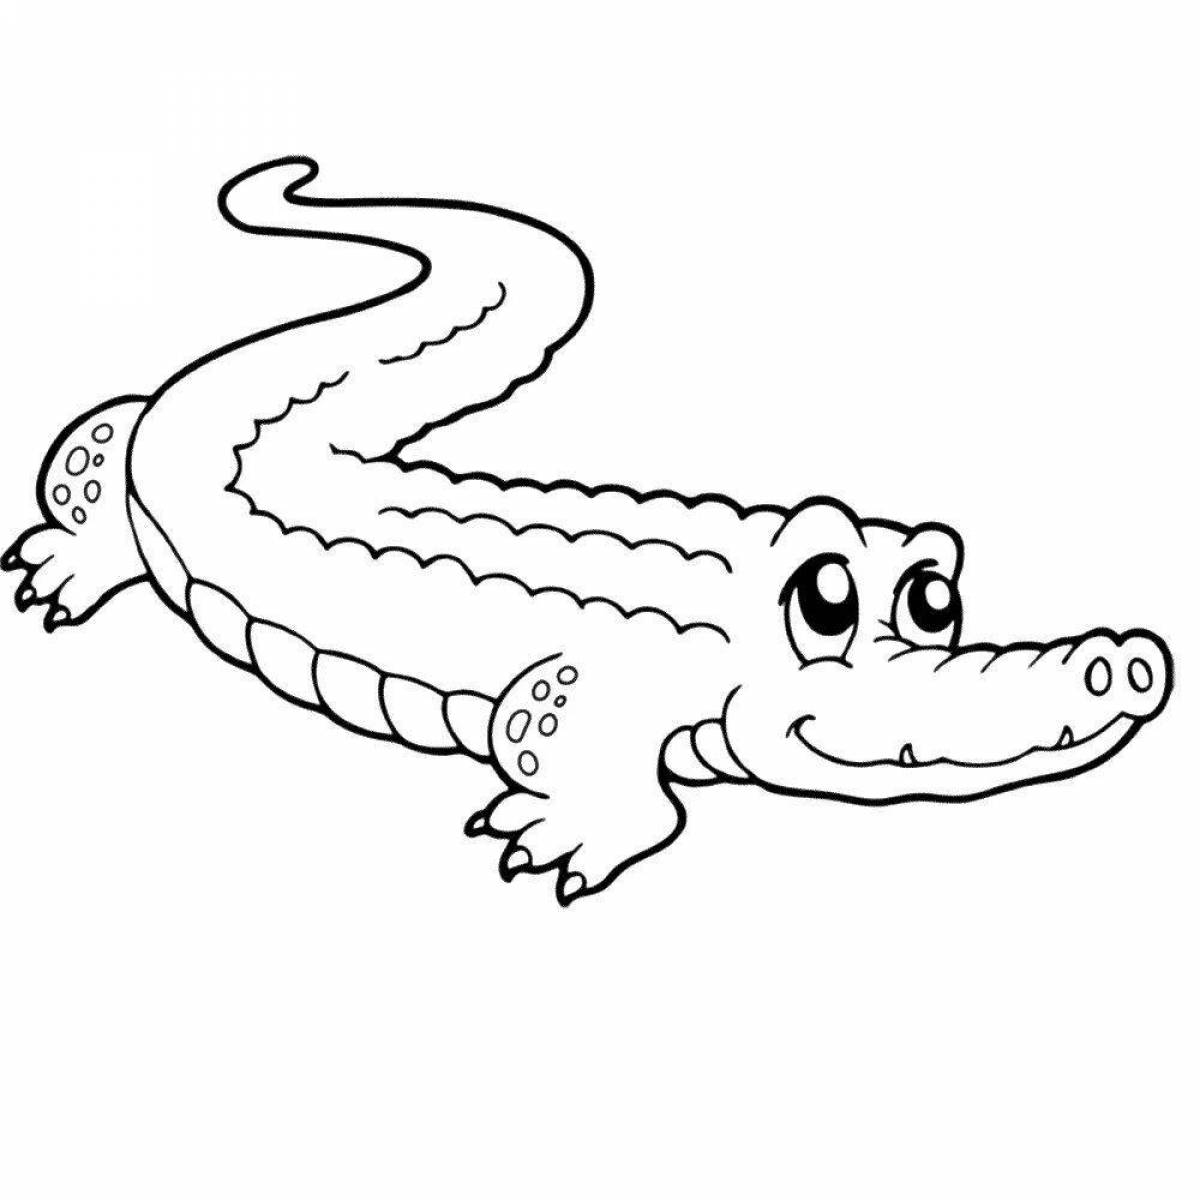 Attractive crocodile pattern for kids